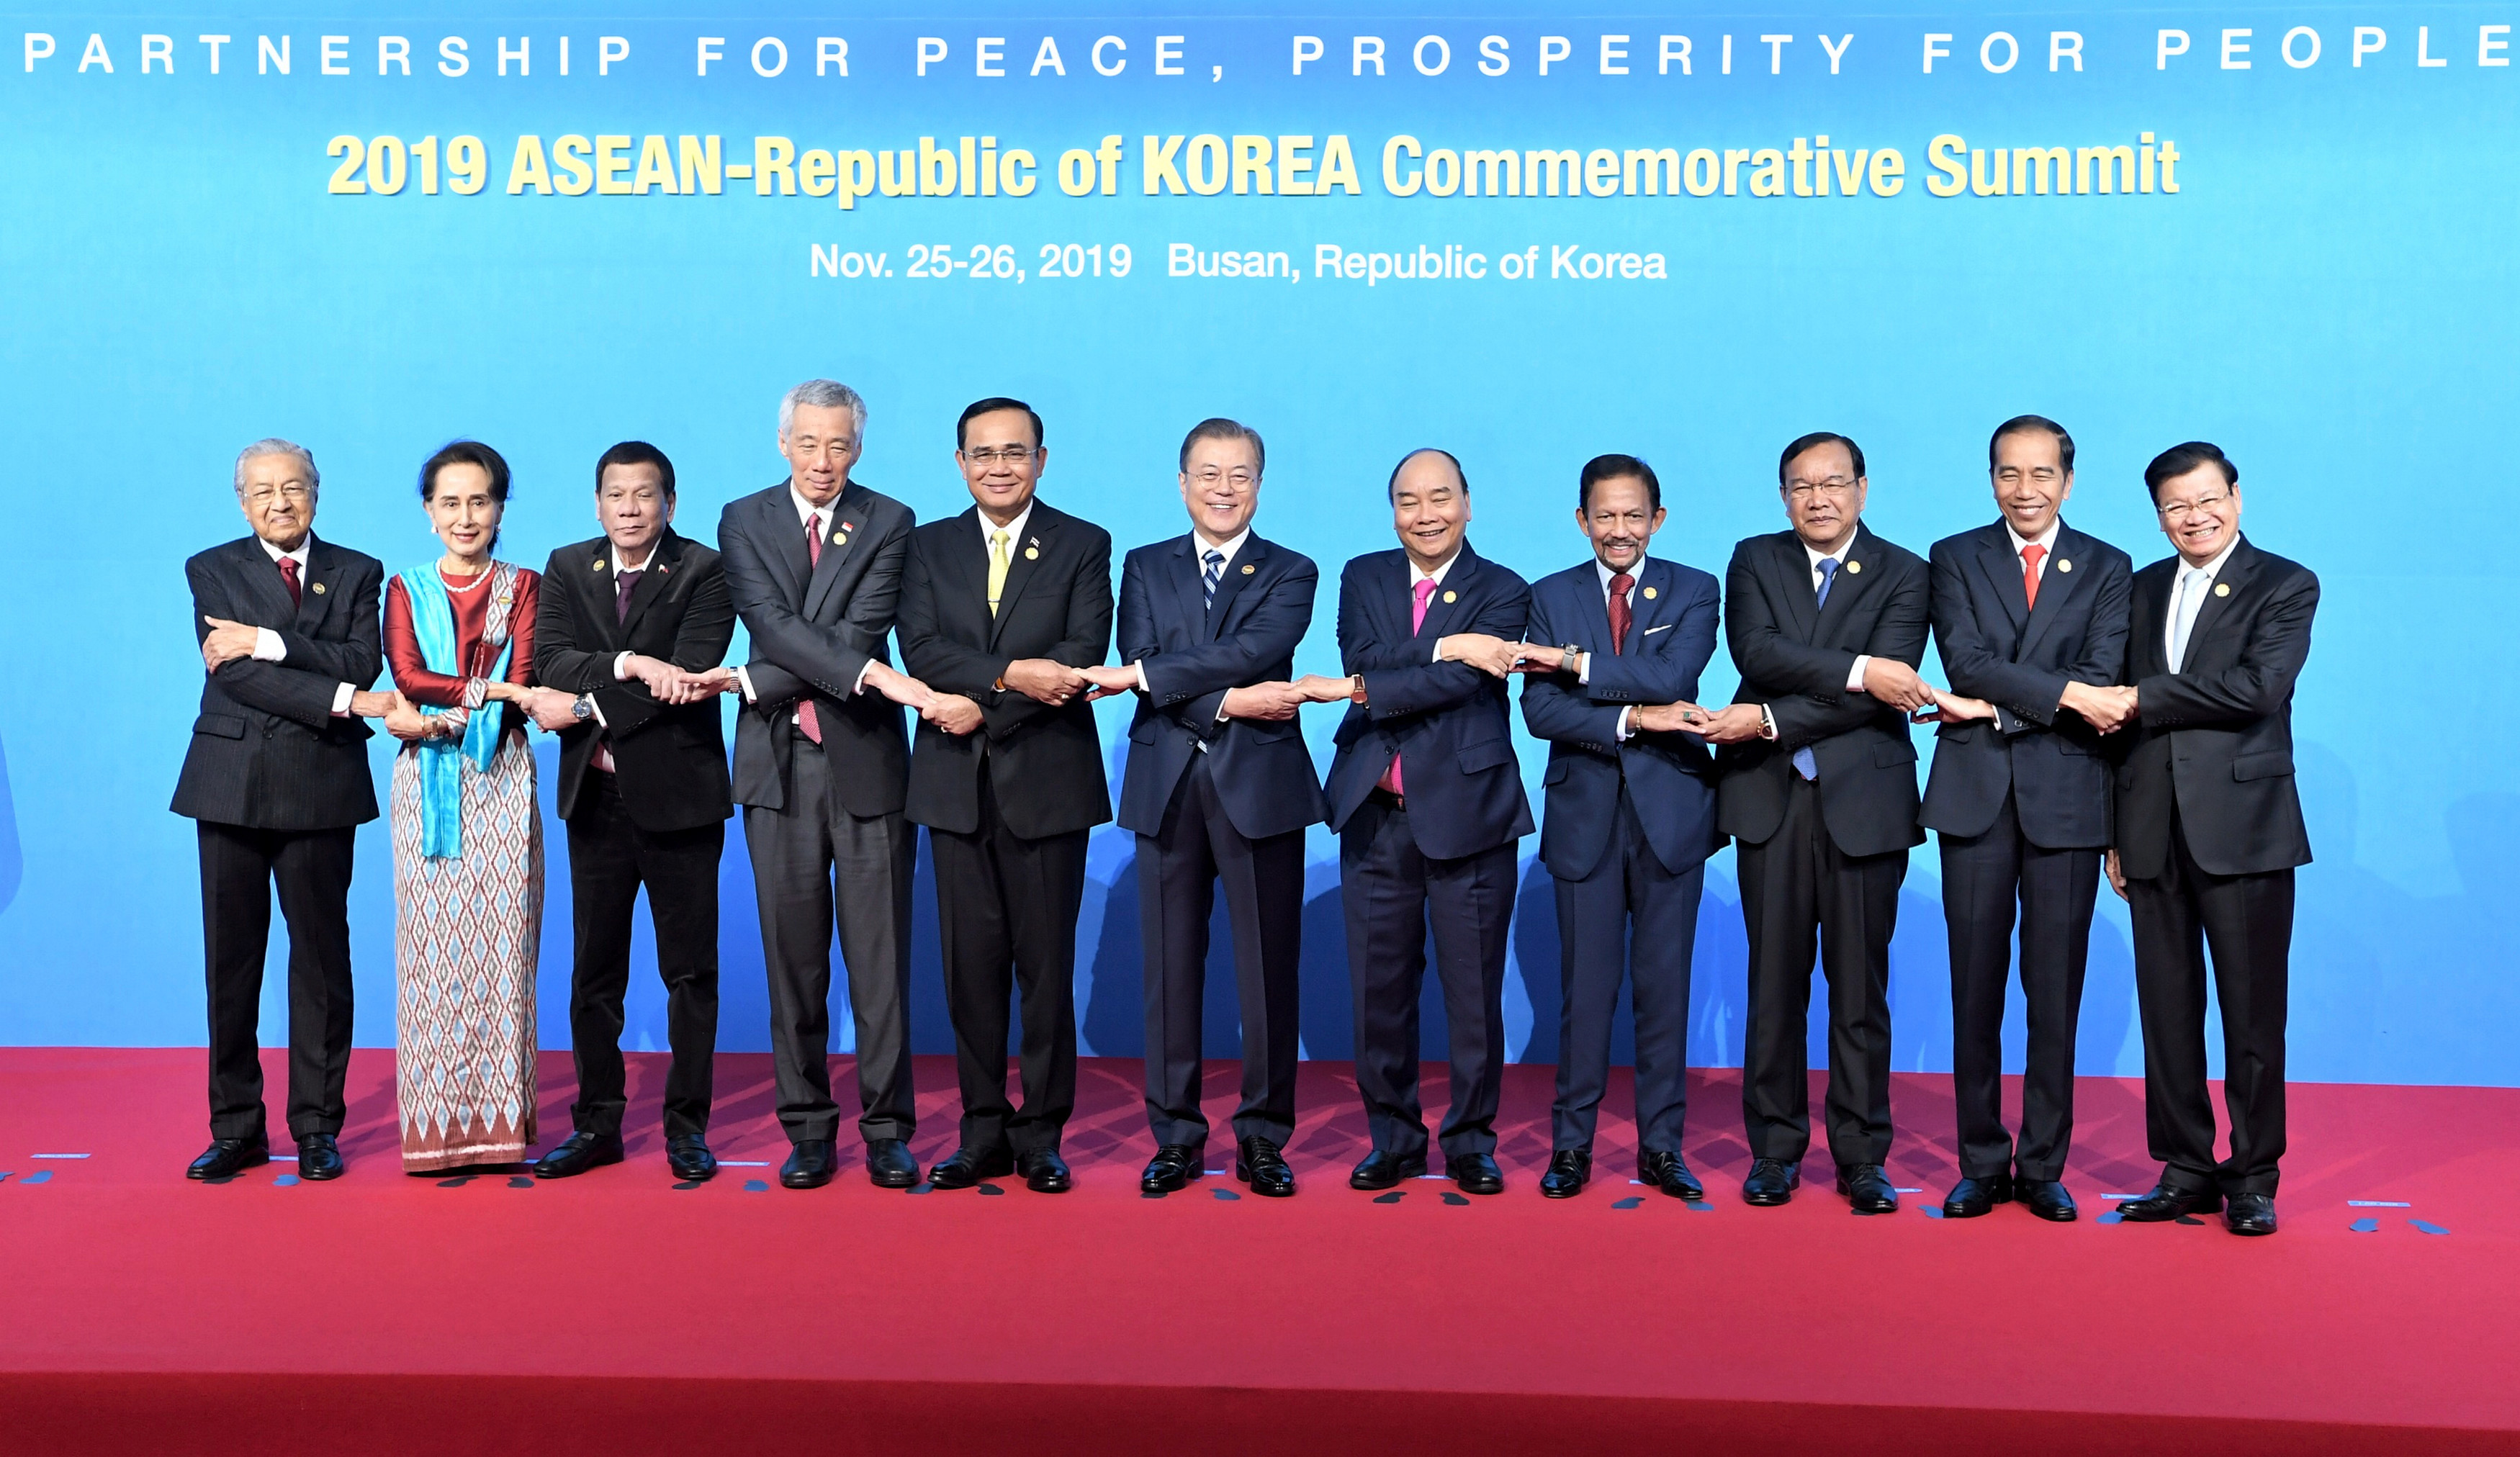 S Korea, Asean adopt new partnership vision statement in Busan Summit